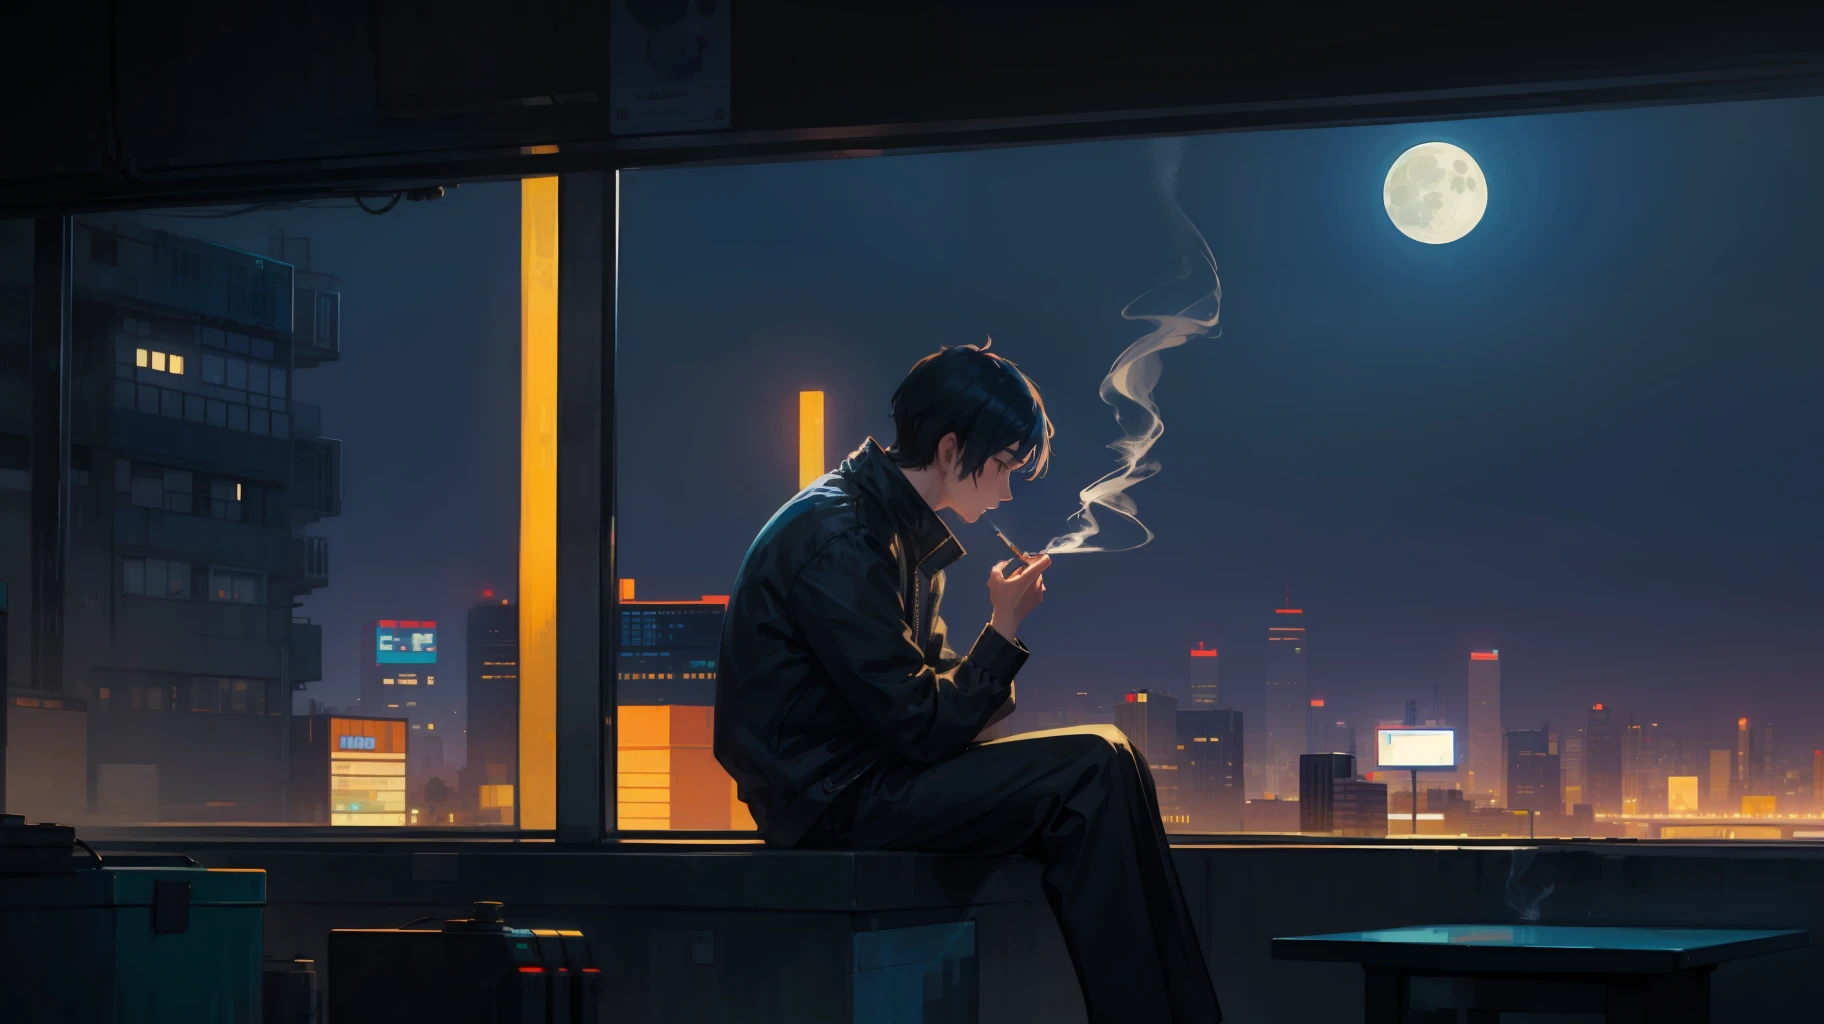 pixelart 2d ผู้ชายสูบบุหรี่ บุหรี่ หน้าต่างถัดไป ในขณะที่มอง ดวงจันทร์ ศิลปะพิกเซล สไตล์ cyberpunk แสงไฟของเมือง เมืองแห่งอนาคต hd สุดยอดรายละเอียด 2d